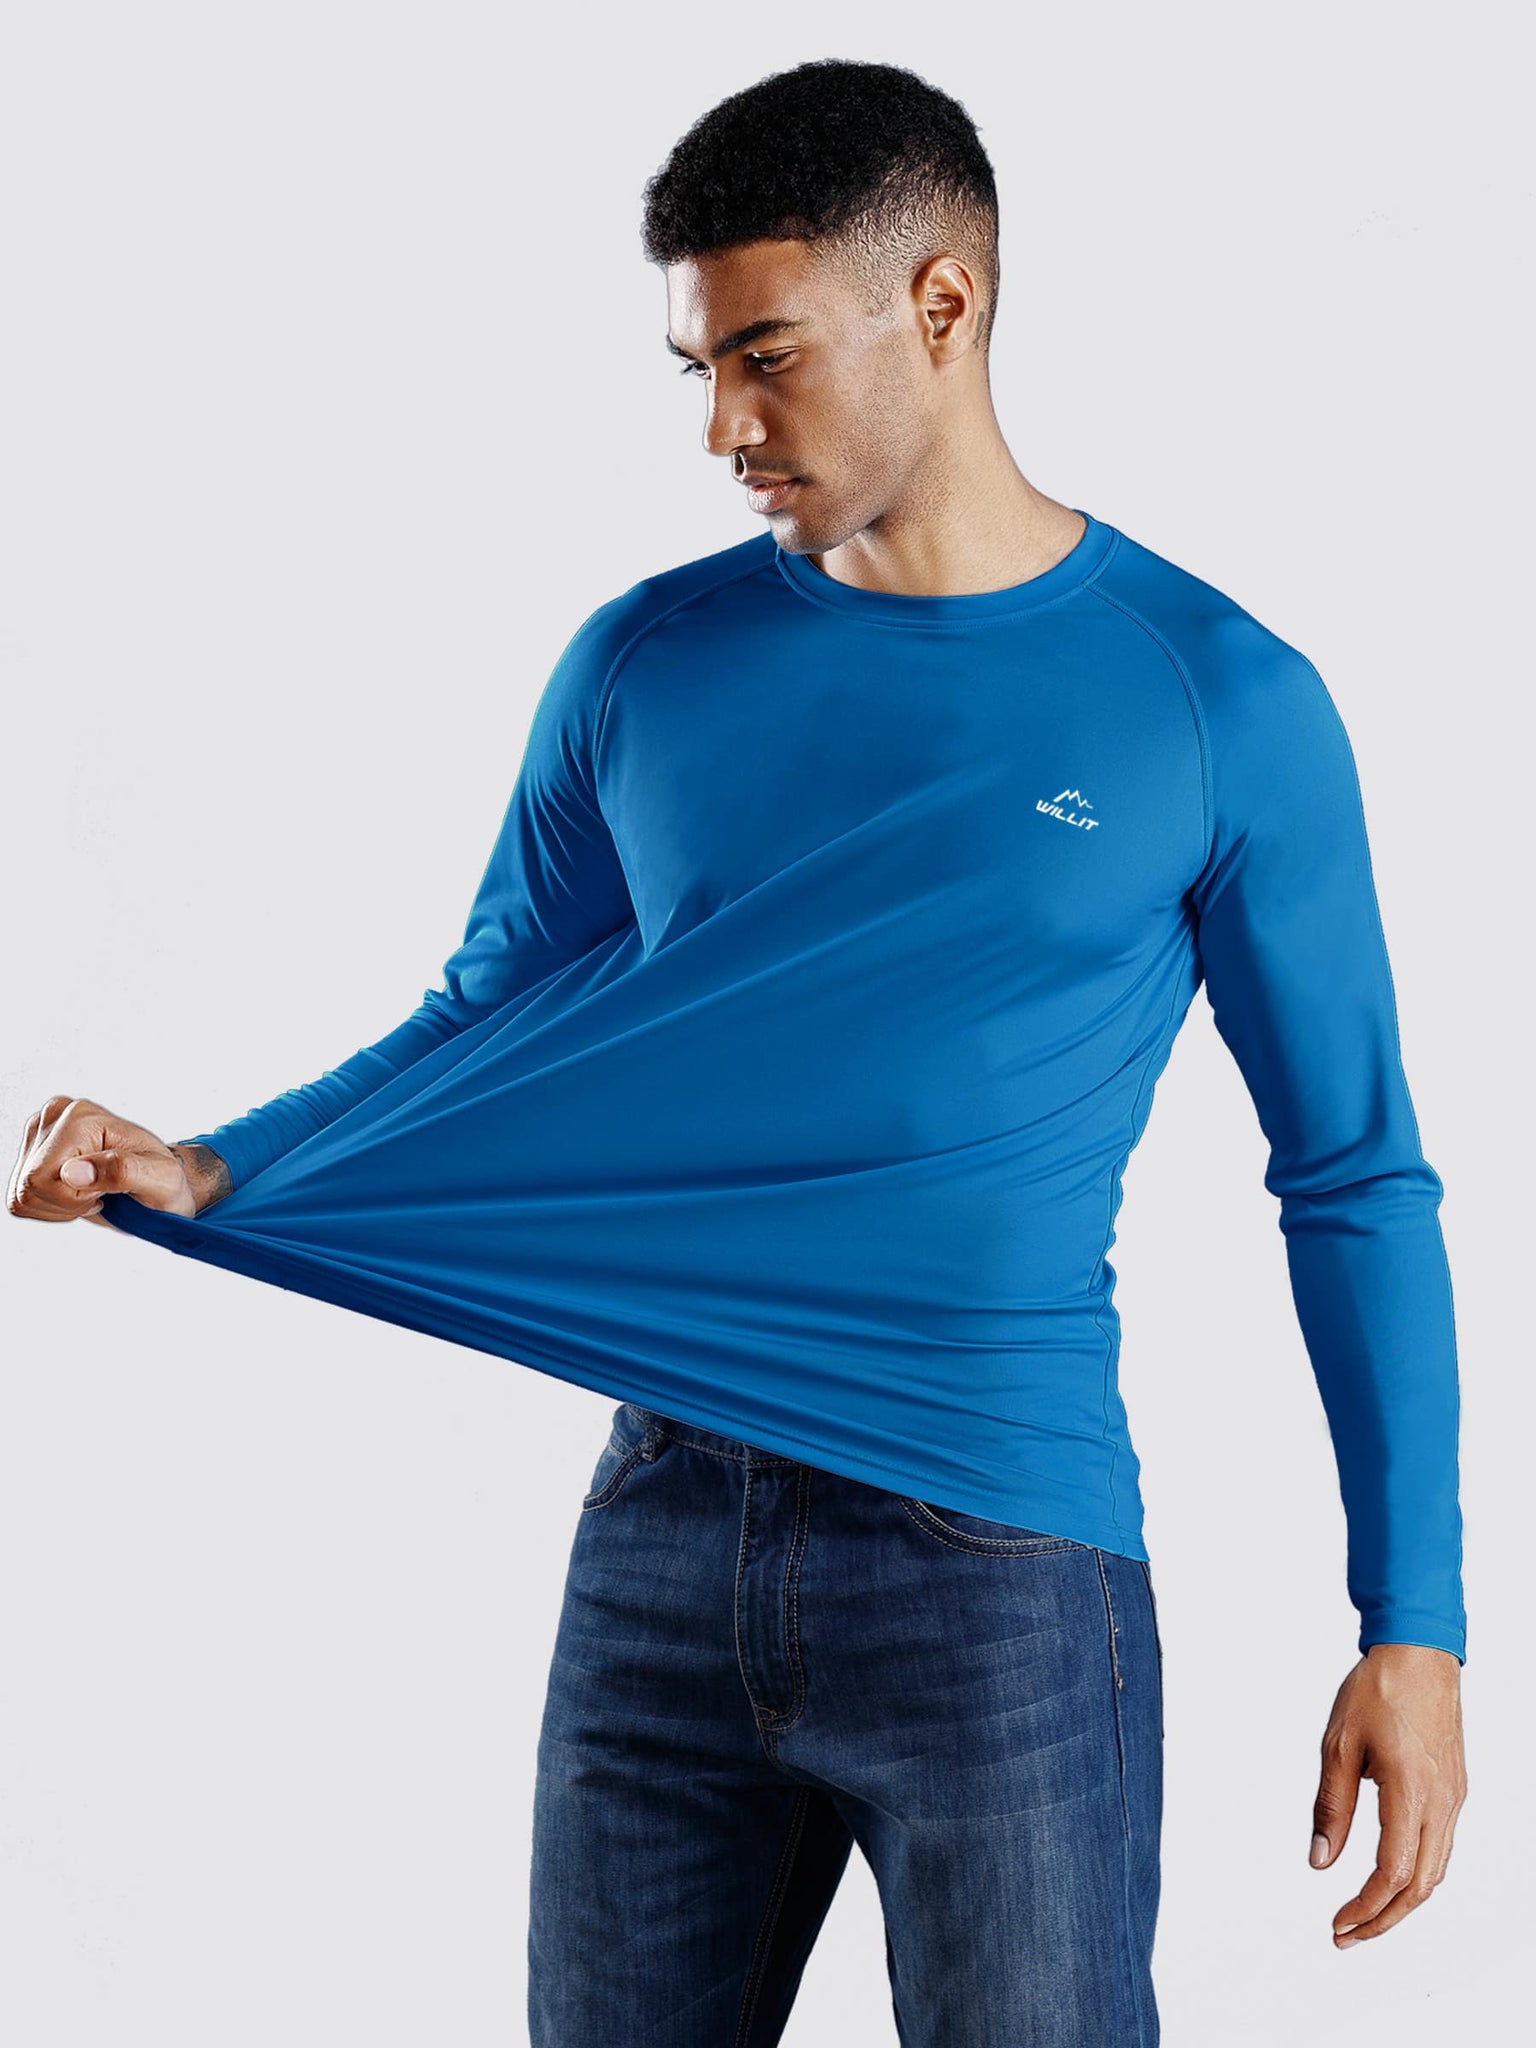 Willit Men's Sun Protection Long Sleeve Shirts_Brilliant Blue_model2